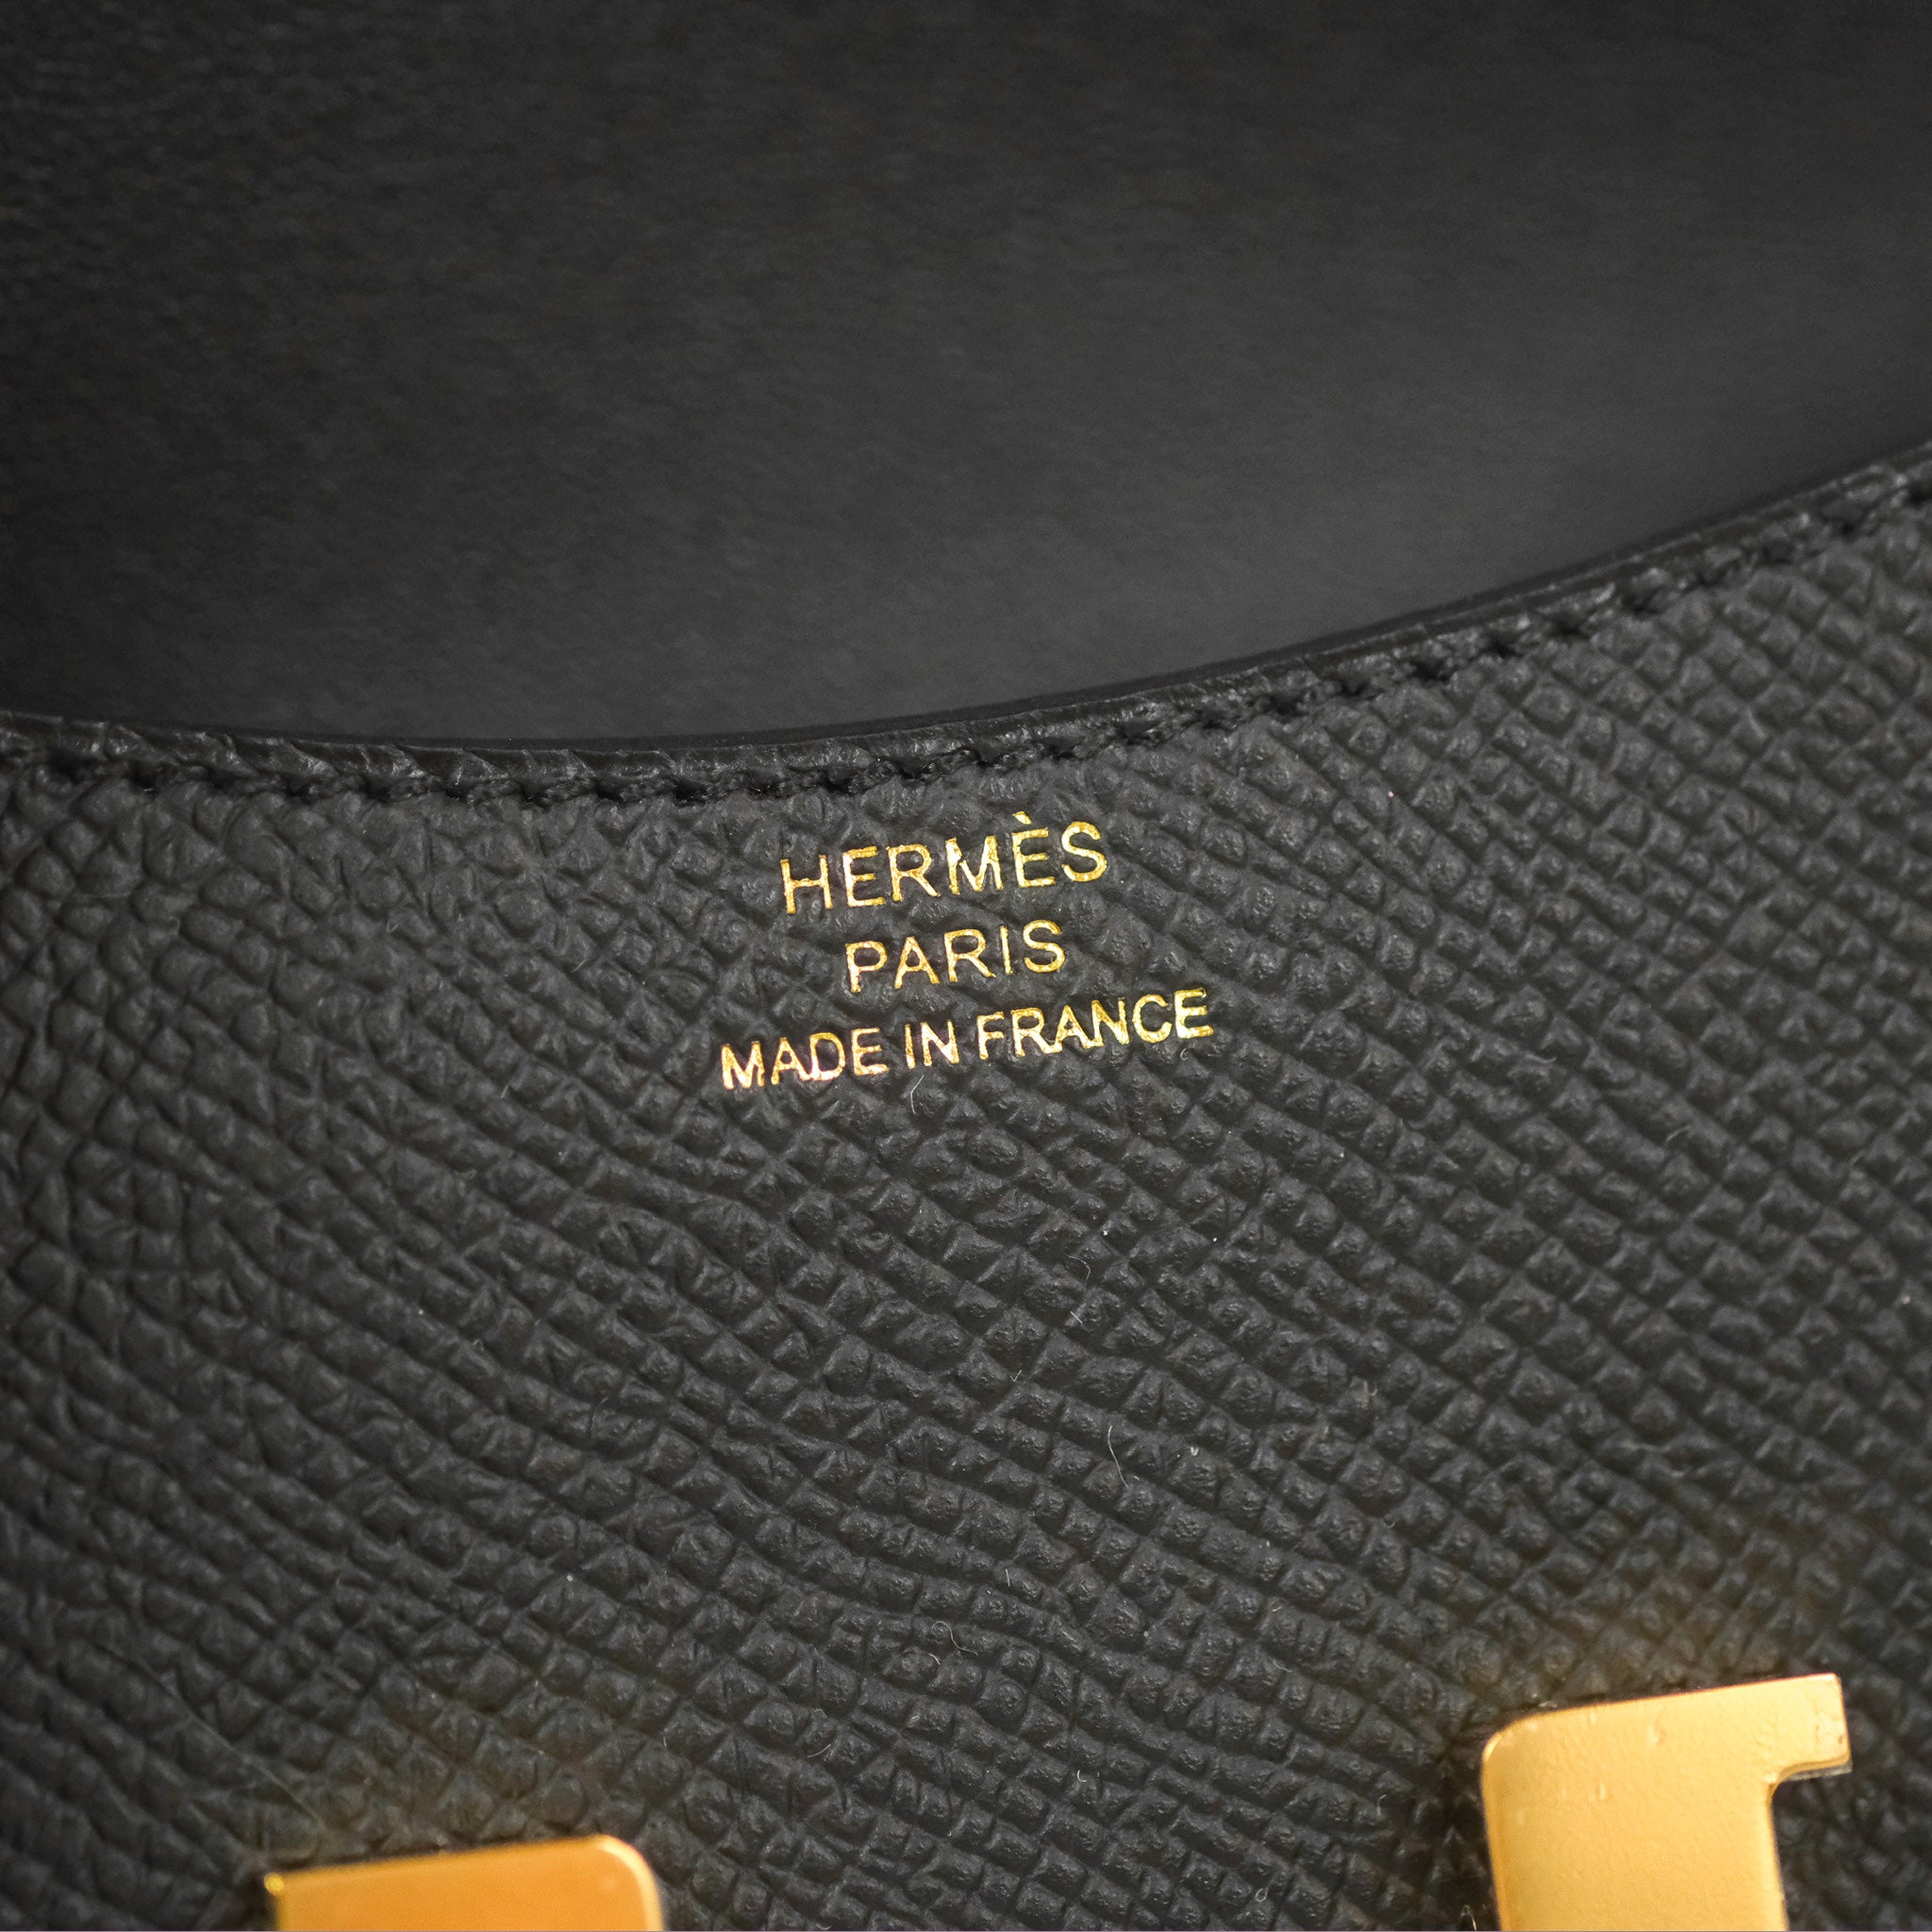 Hermès Constance Slim Wallet Etain Epsom Gold Hardware – Coco Approved  Studio